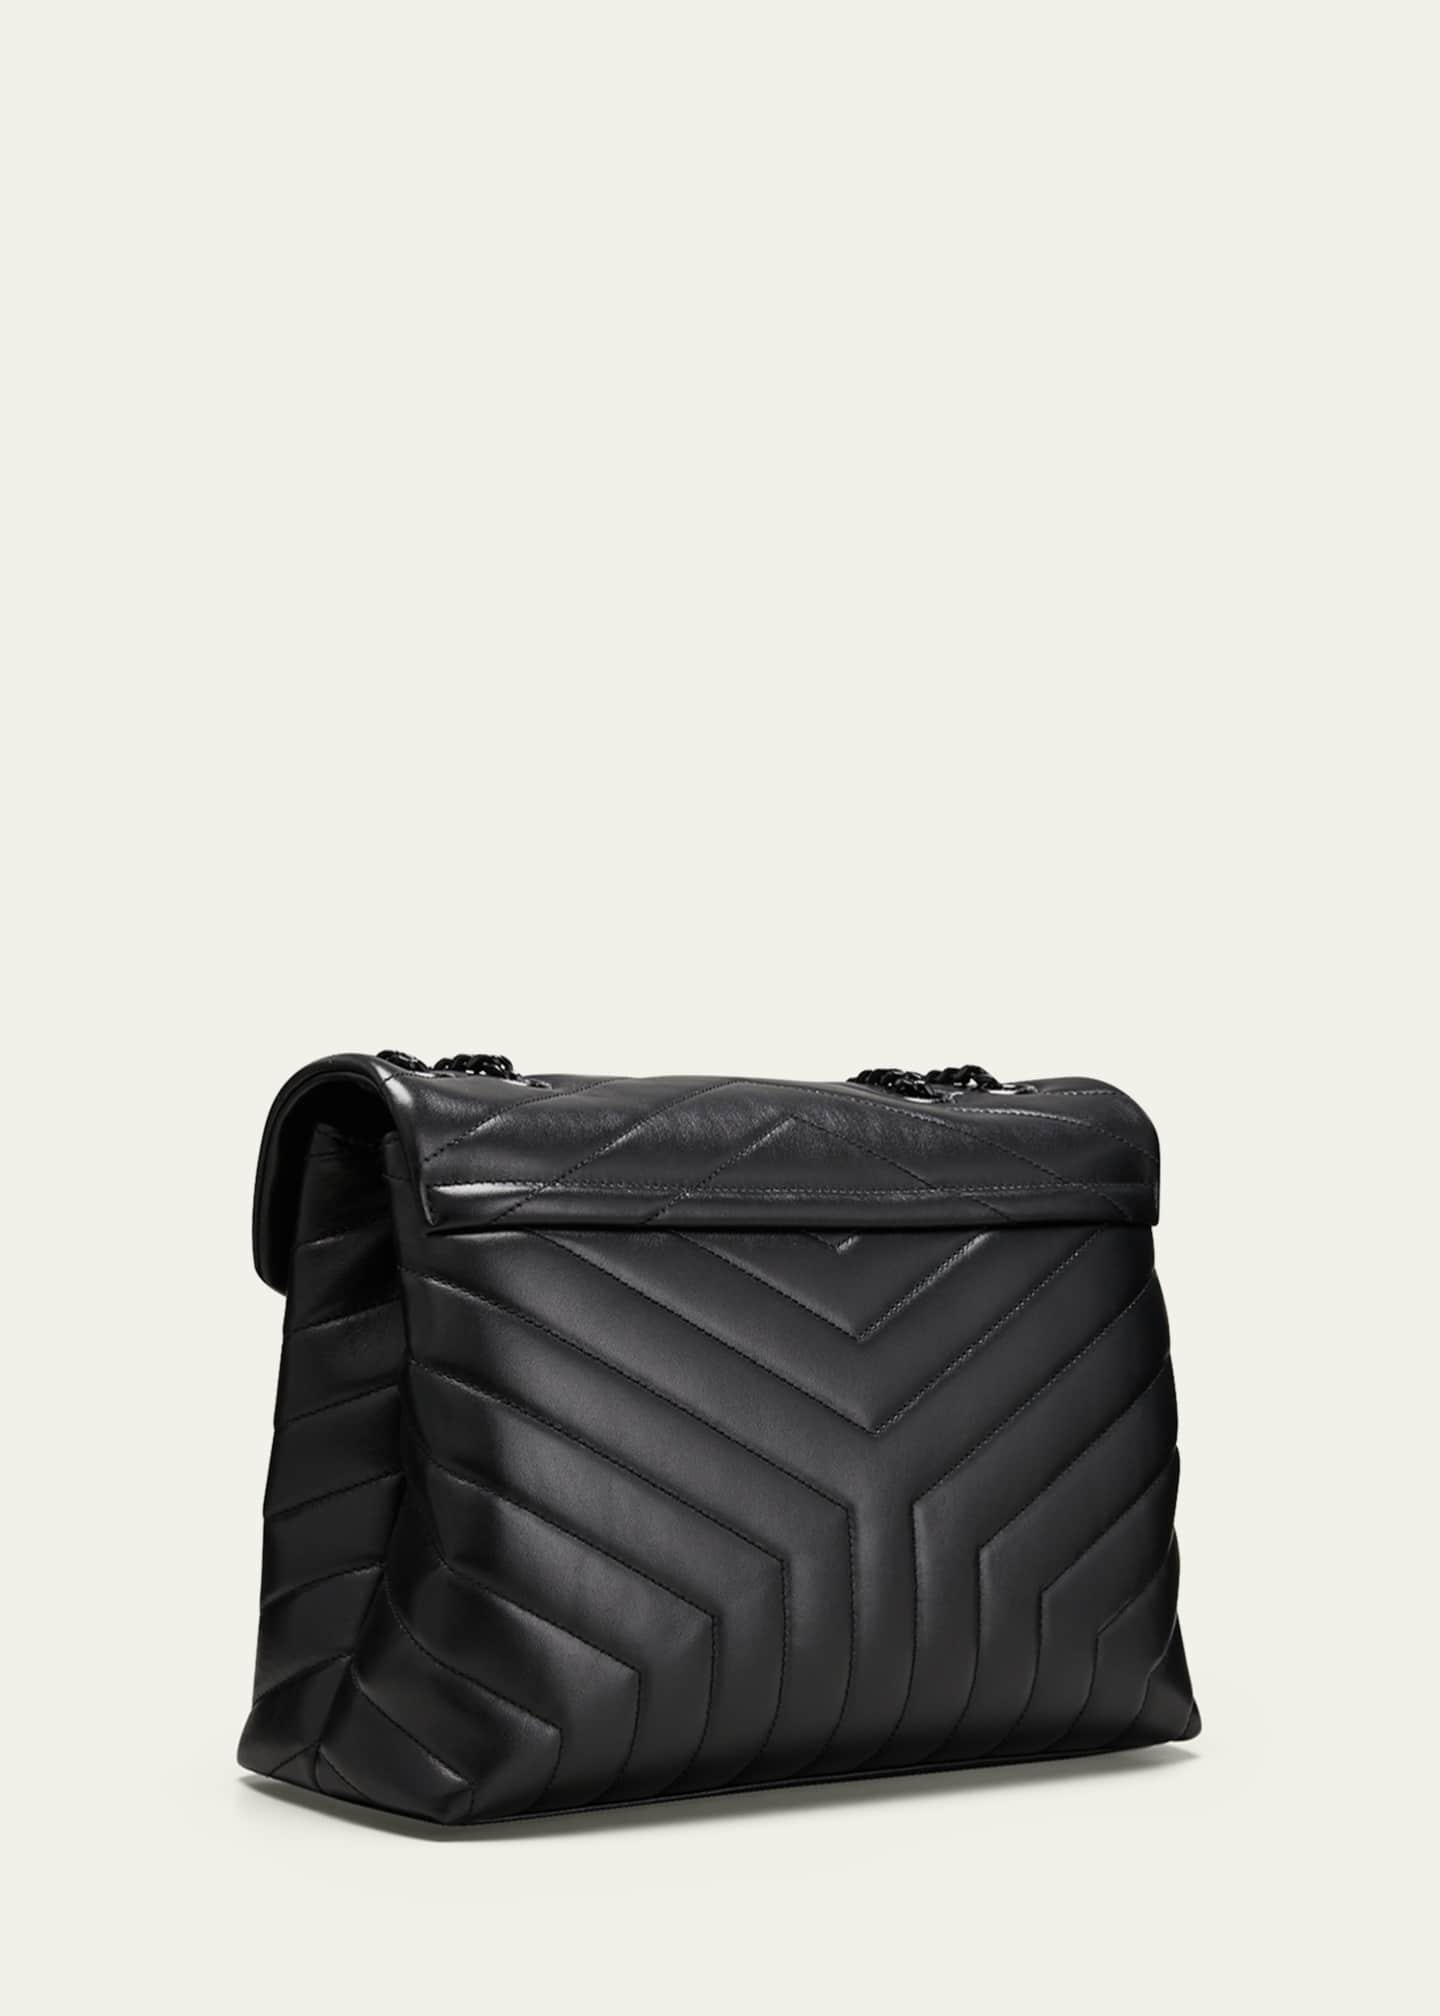 Saint Laurent Loulou Medium YSL Shoulder Bag in Quilted Leather Image 3 of 5